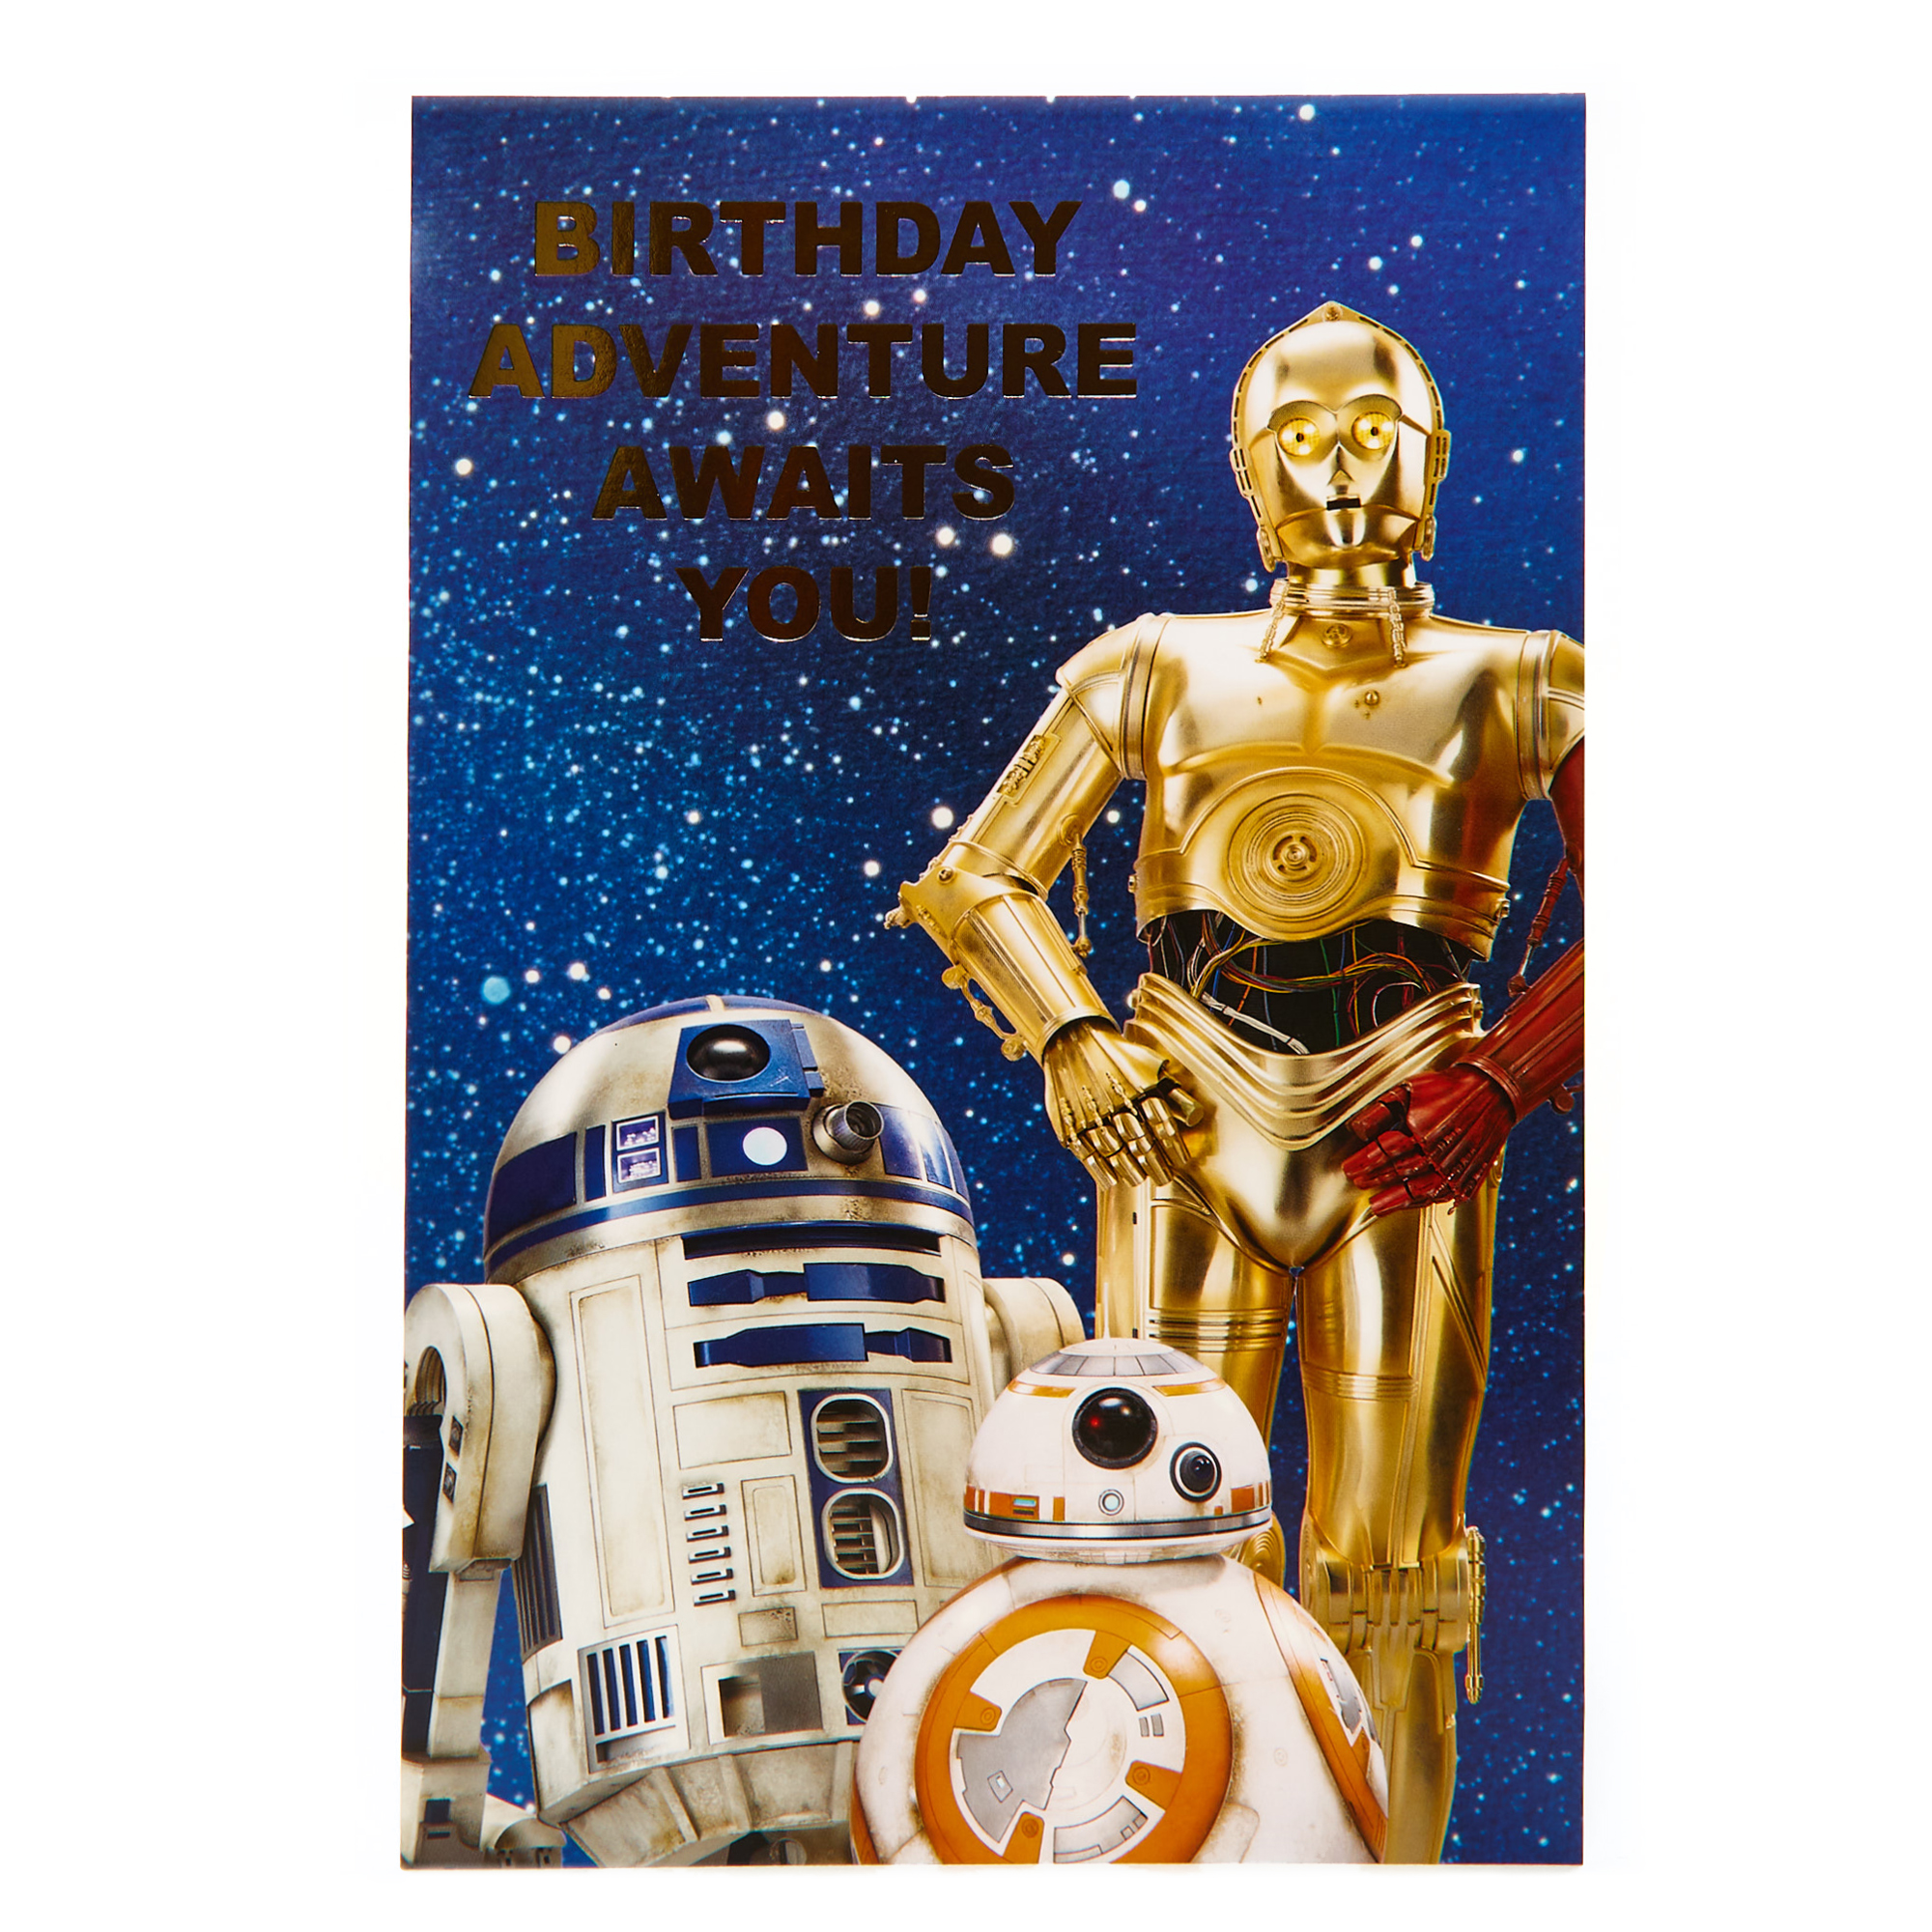 buy-star-wars-birthday-card-adventure-awaits-you-for-gbp-0-99-card